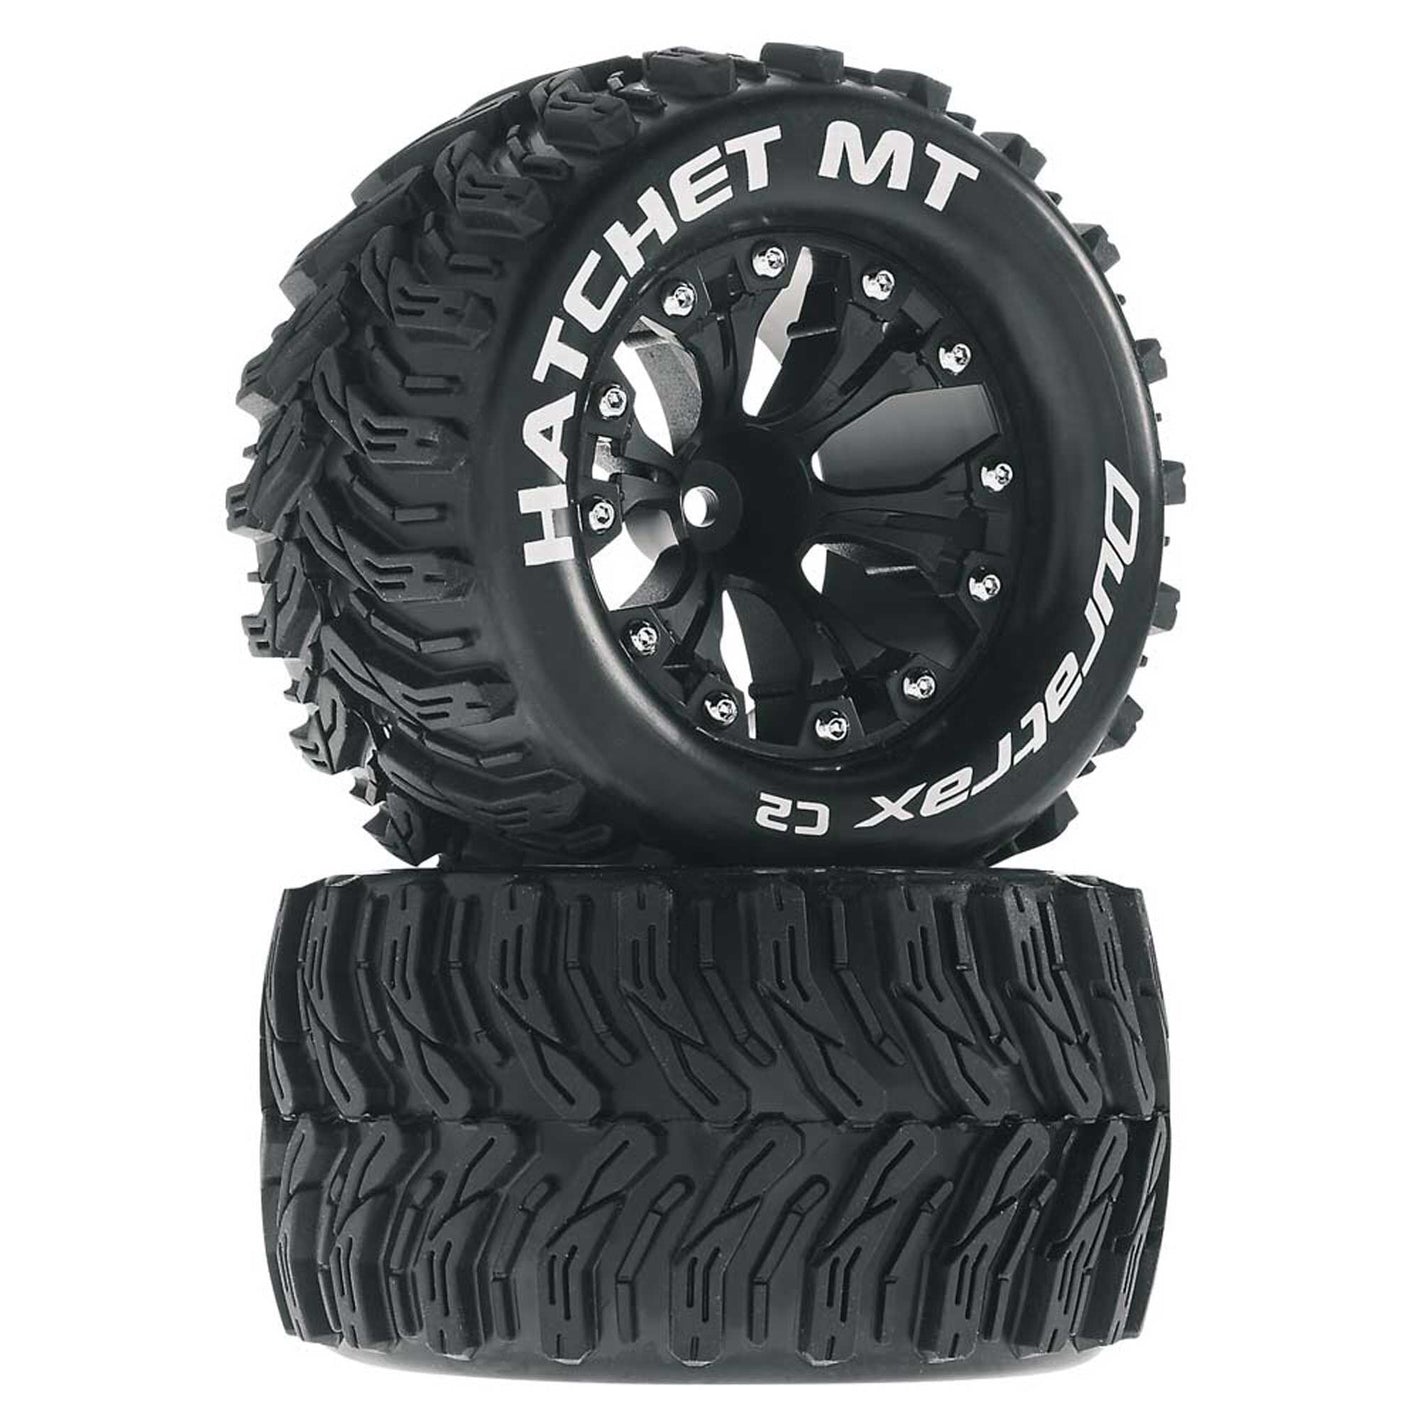 DuraTrax Hatchet MT 2.8" Mounted Offset Tires, Black (2) DTXC3528